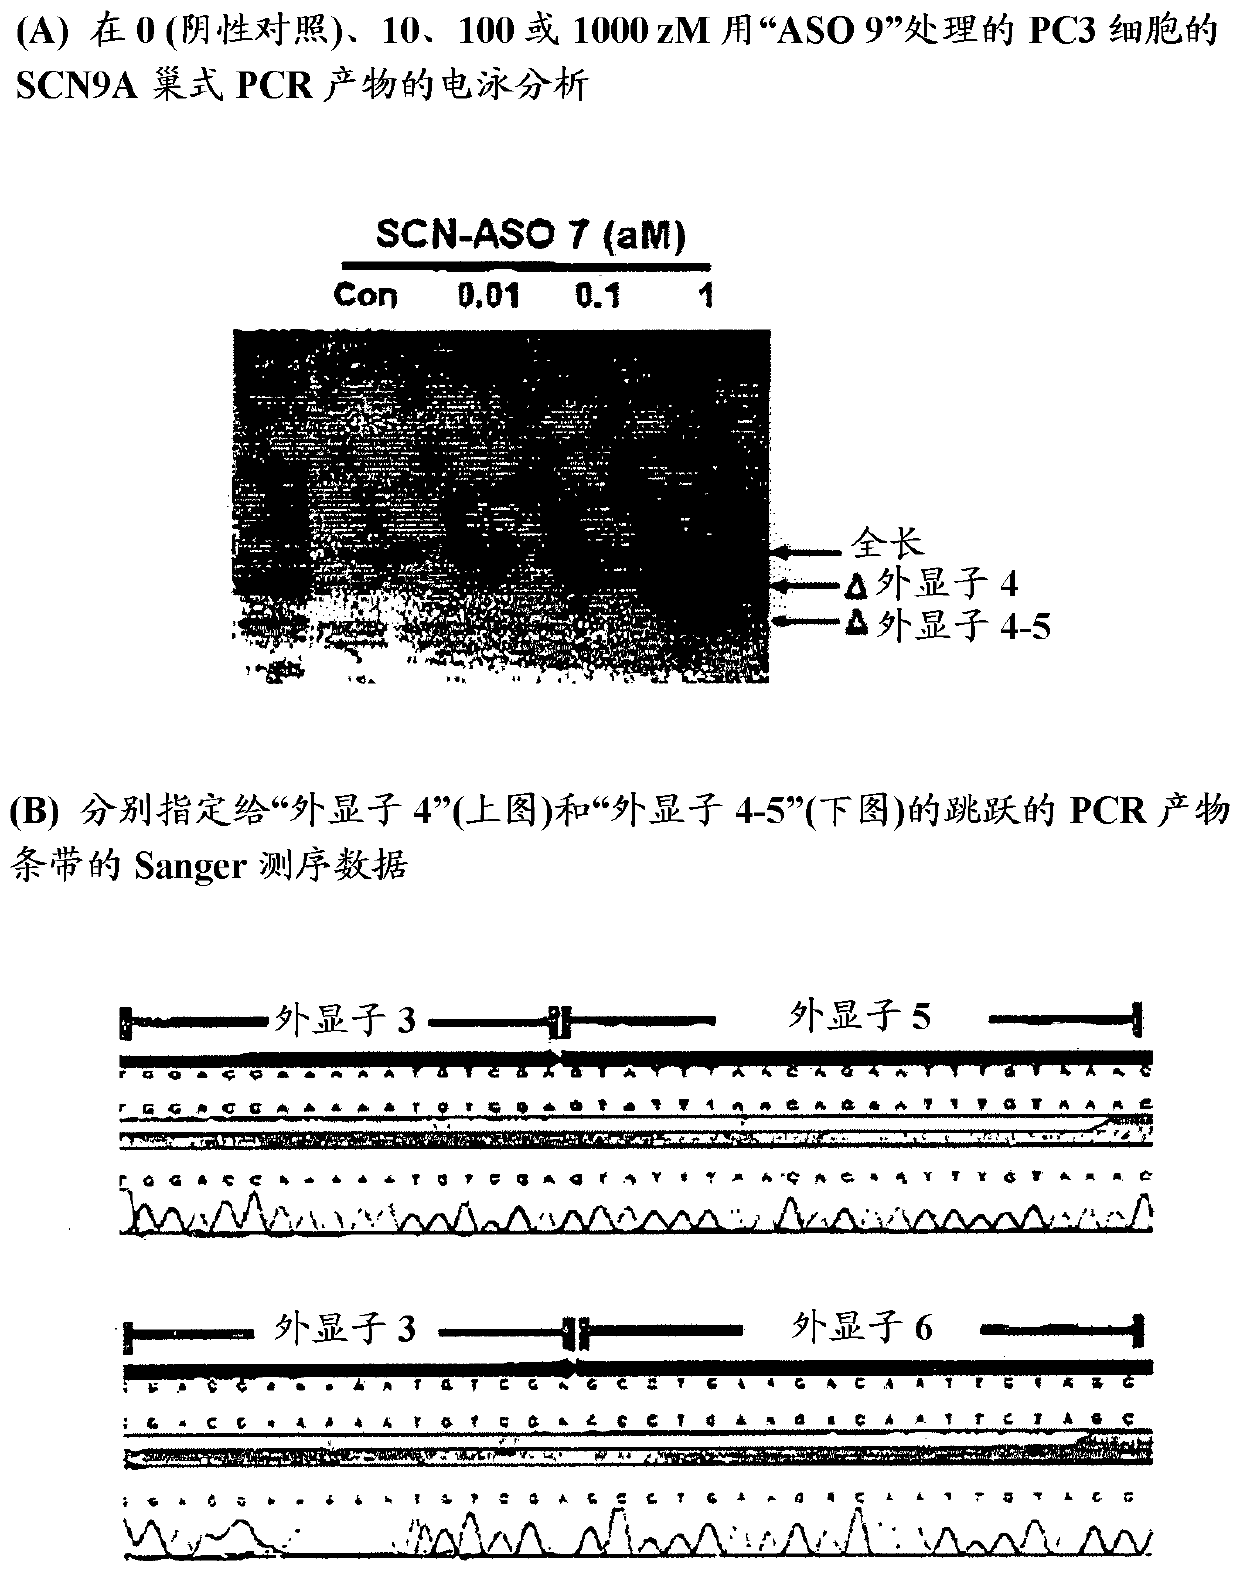 Scn9a antisense oligonucleotides